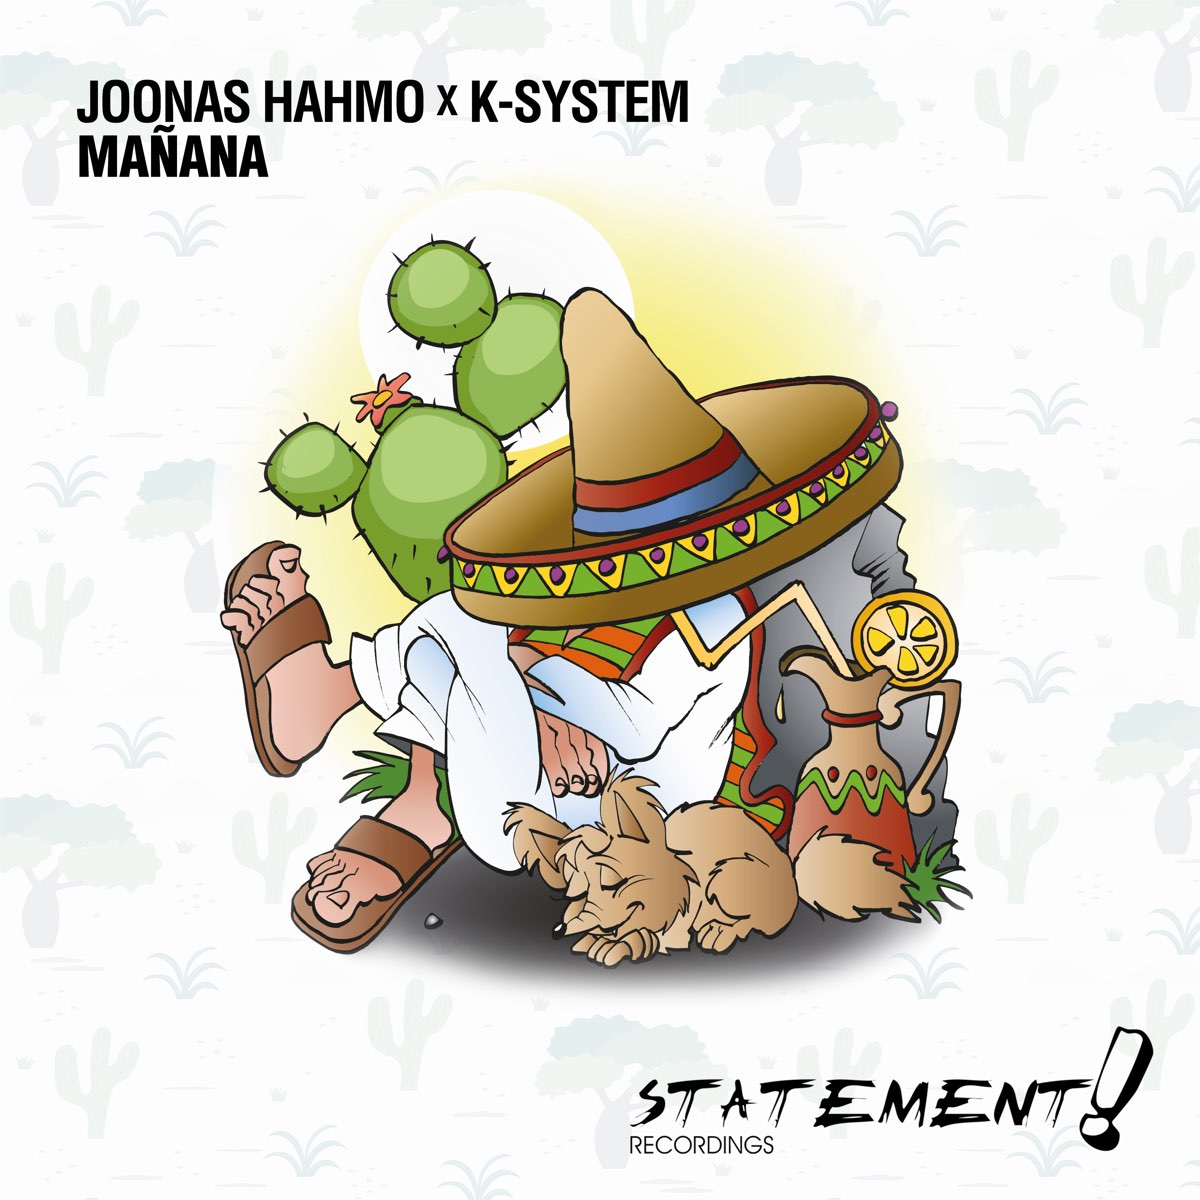 Mañana - Single by Joonas Hahmo & K-System on Apple Music